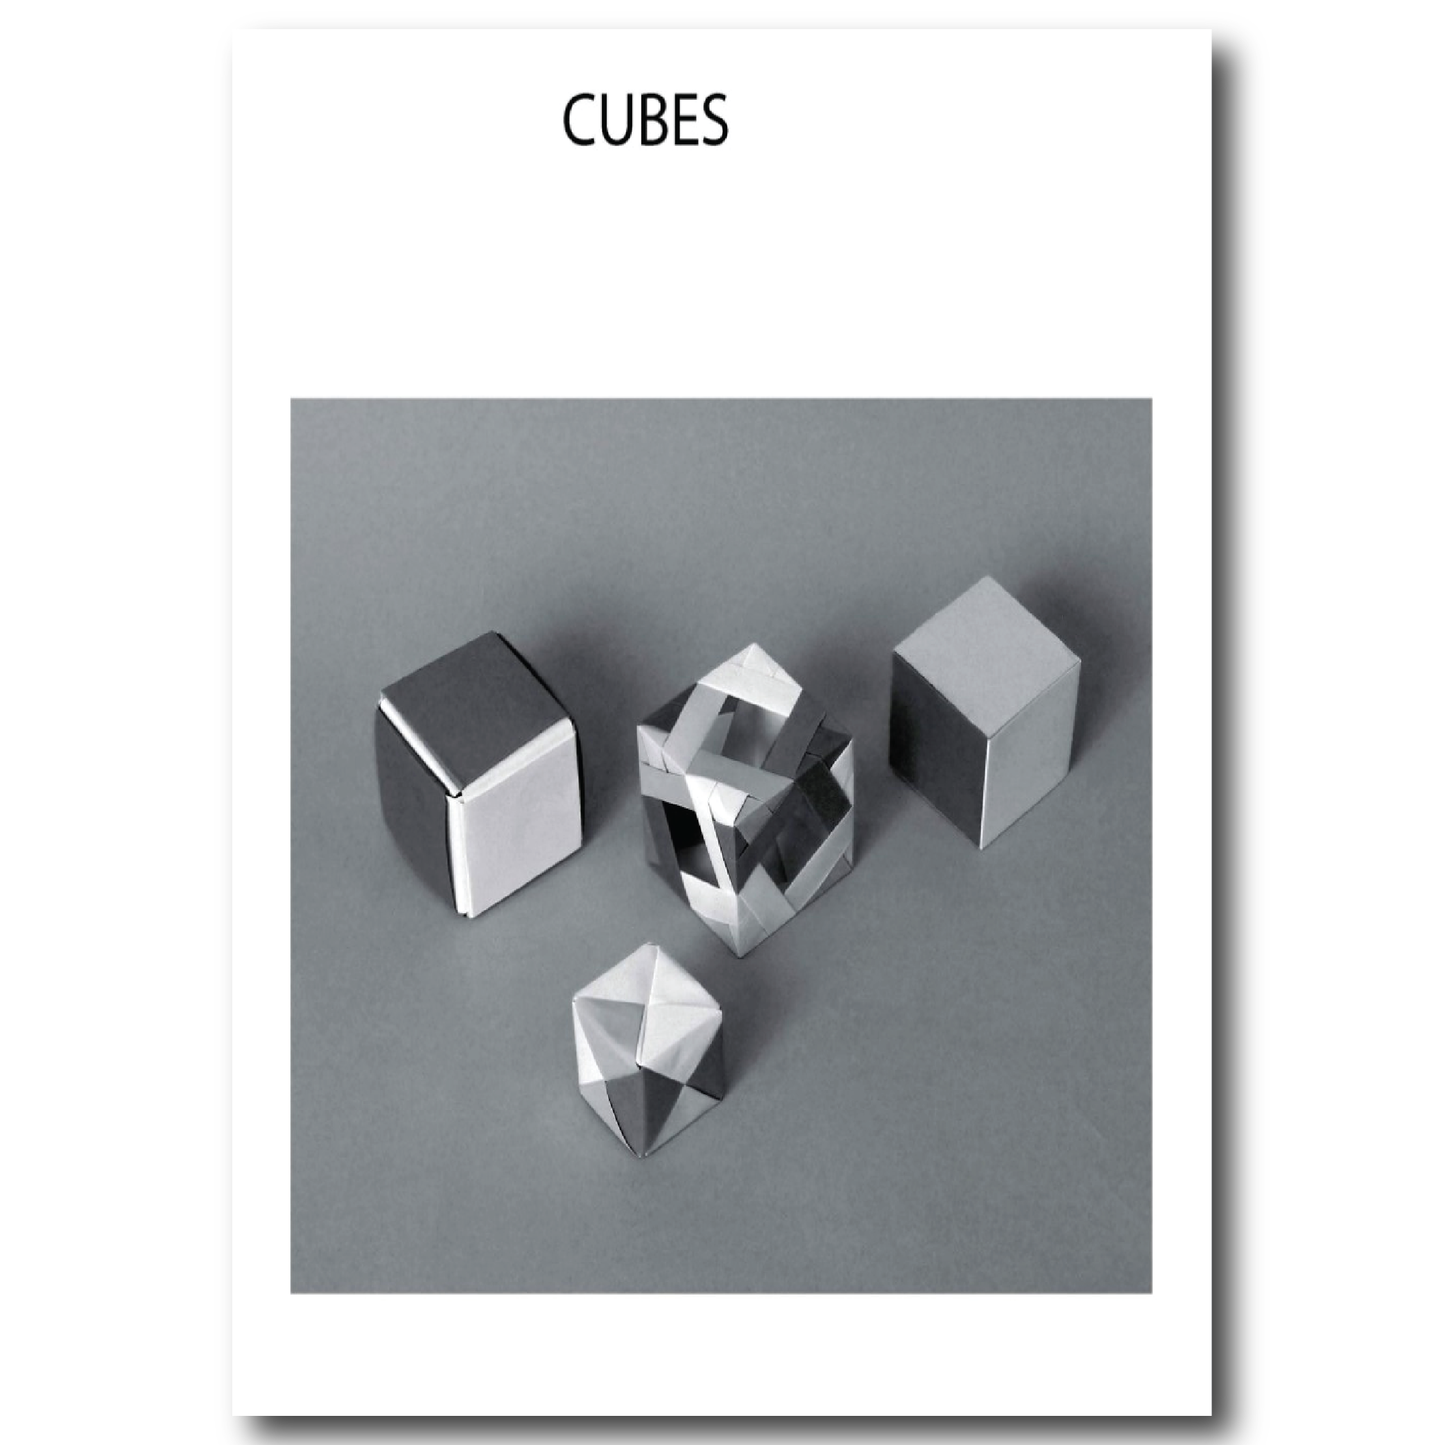 Beginner's Book of Modular Origami Polyhedra: The Platonic Solids